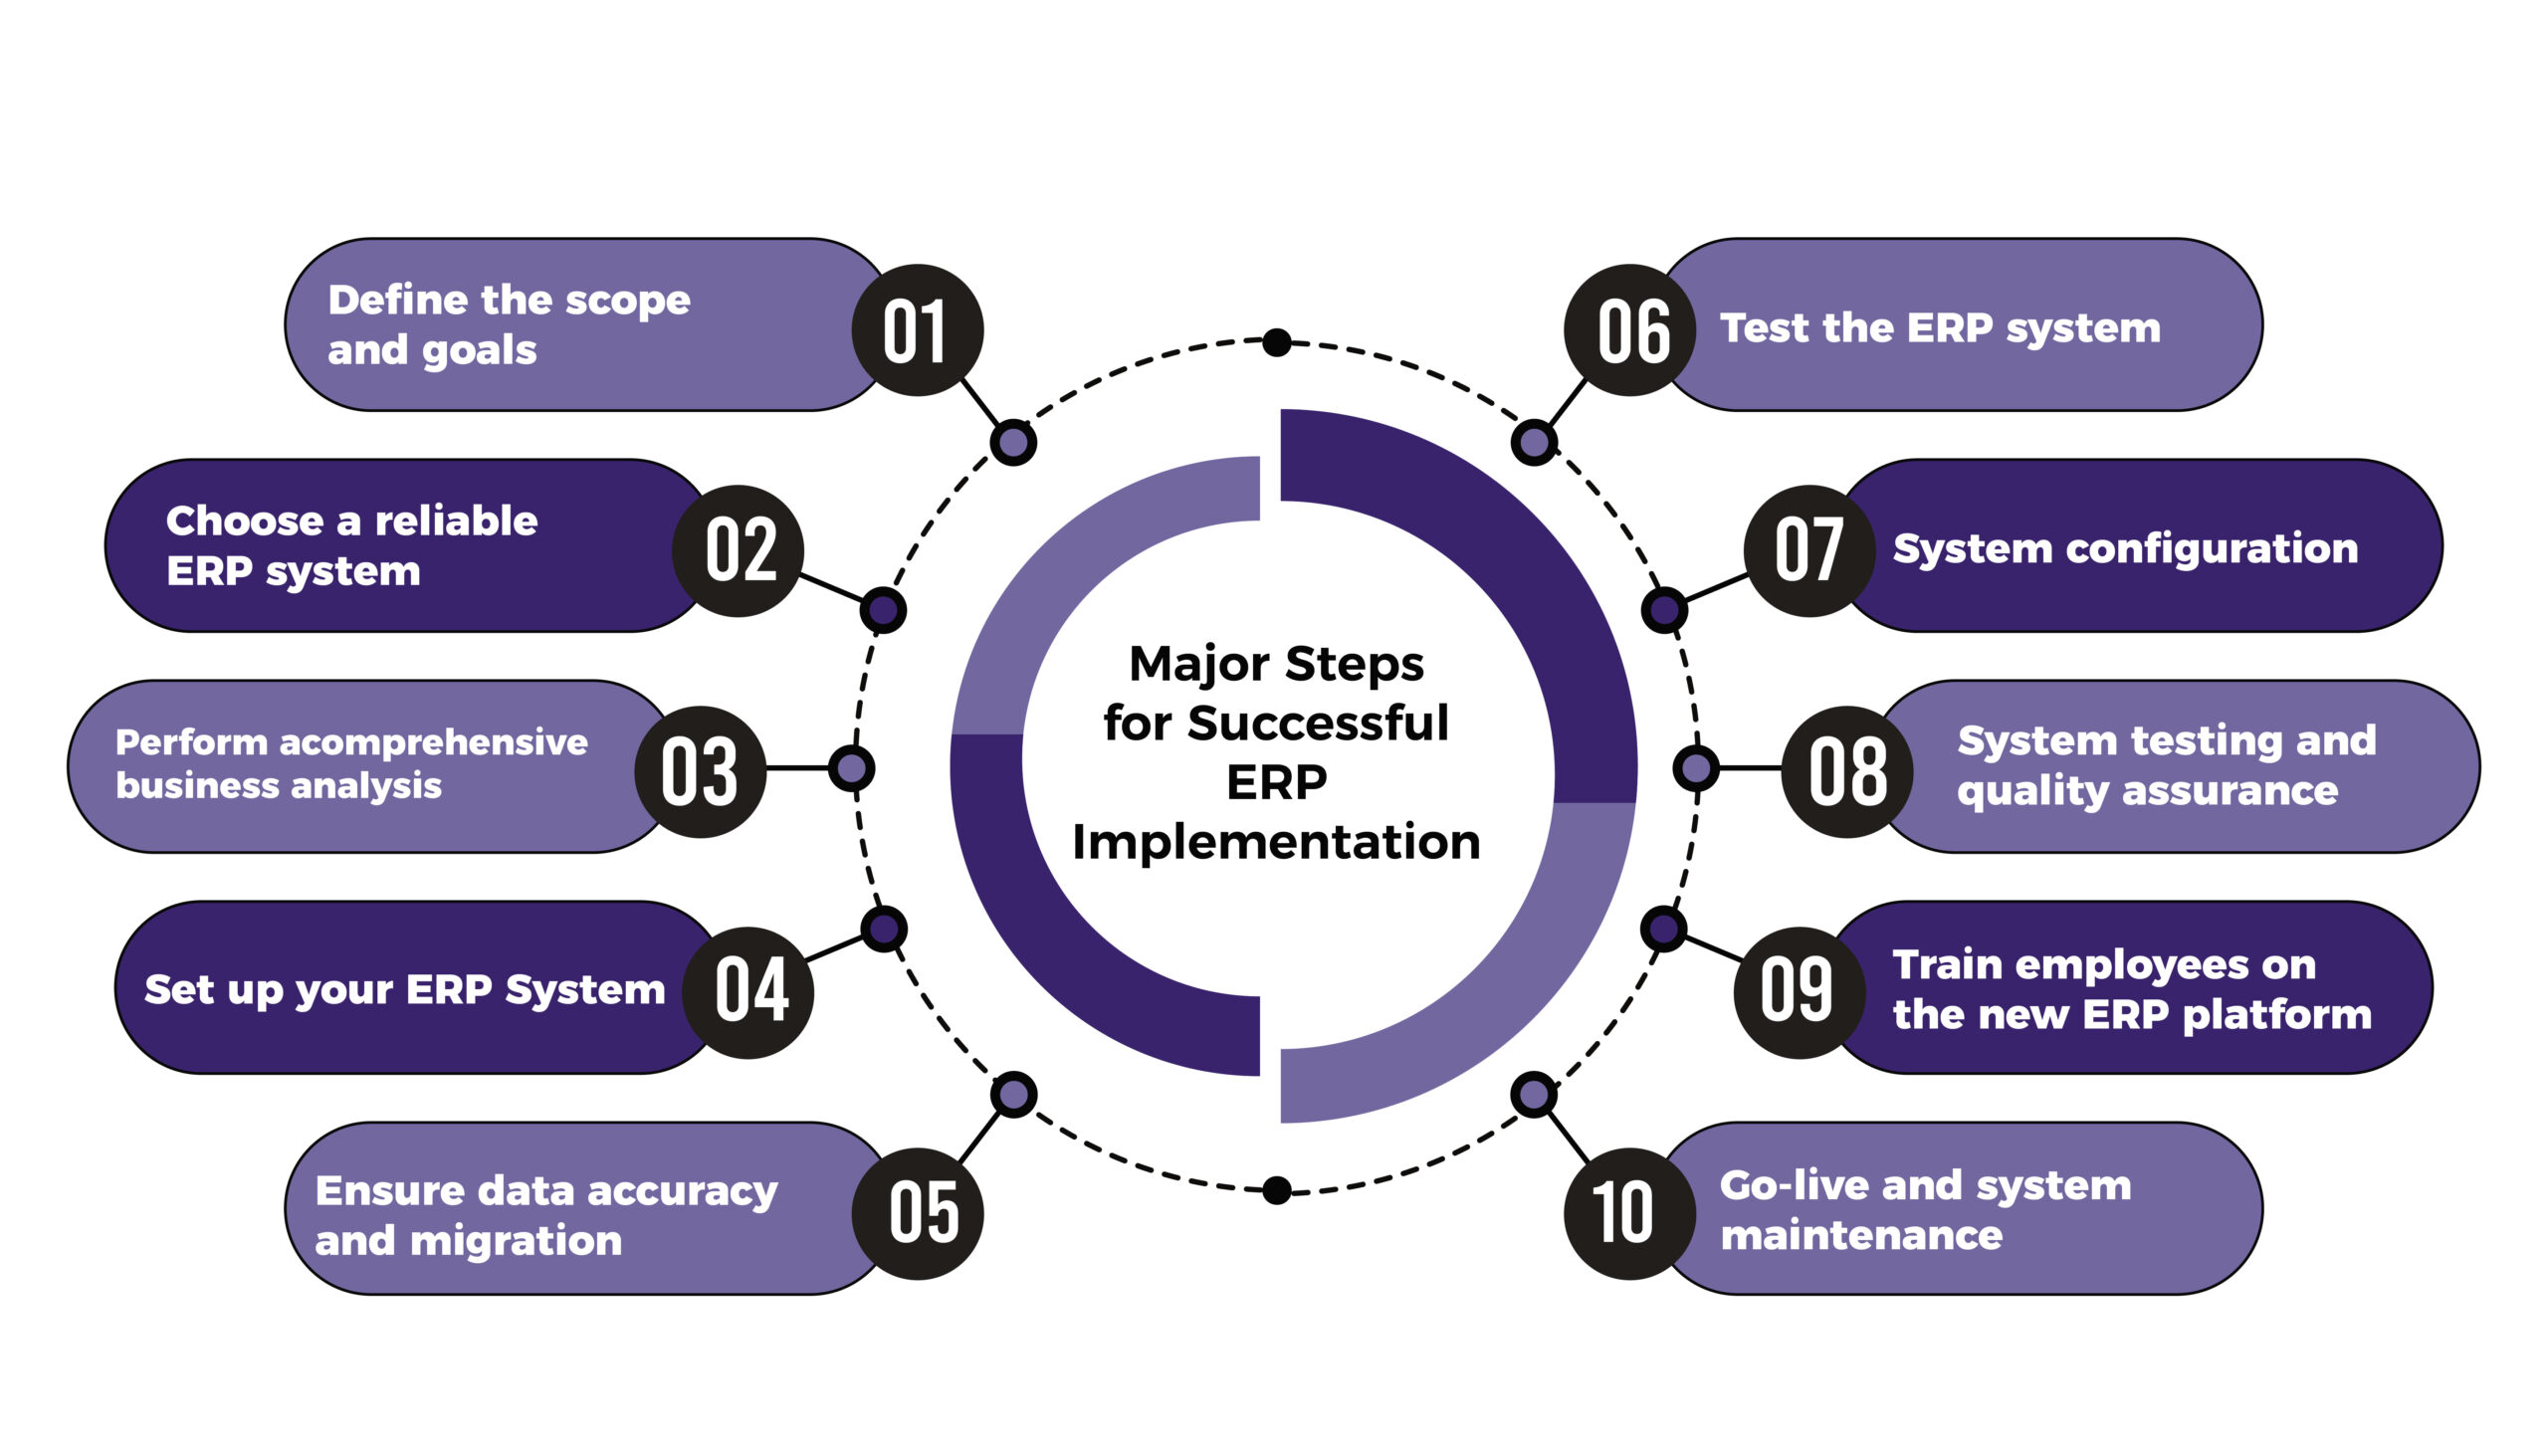 Fig 2: Major Steps for Successful ERP Implementation